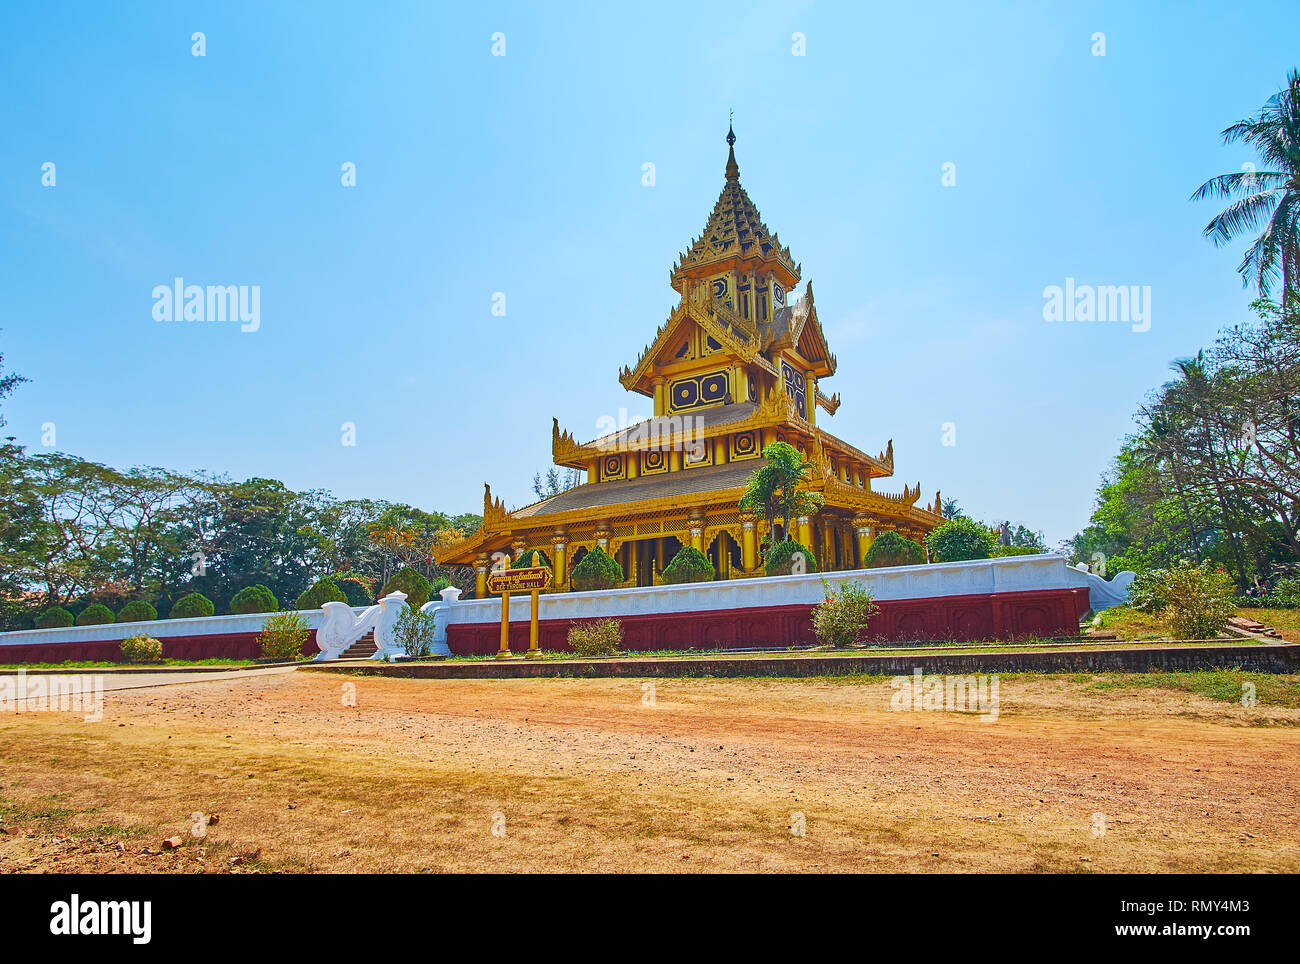 The scenic Bee (Bhammayarthana) Throne Hall of Kanbawzathadi palace with ornate carved decors and traditional Burmese pyatthat roof, Bago, Myanmar. Stock Photo